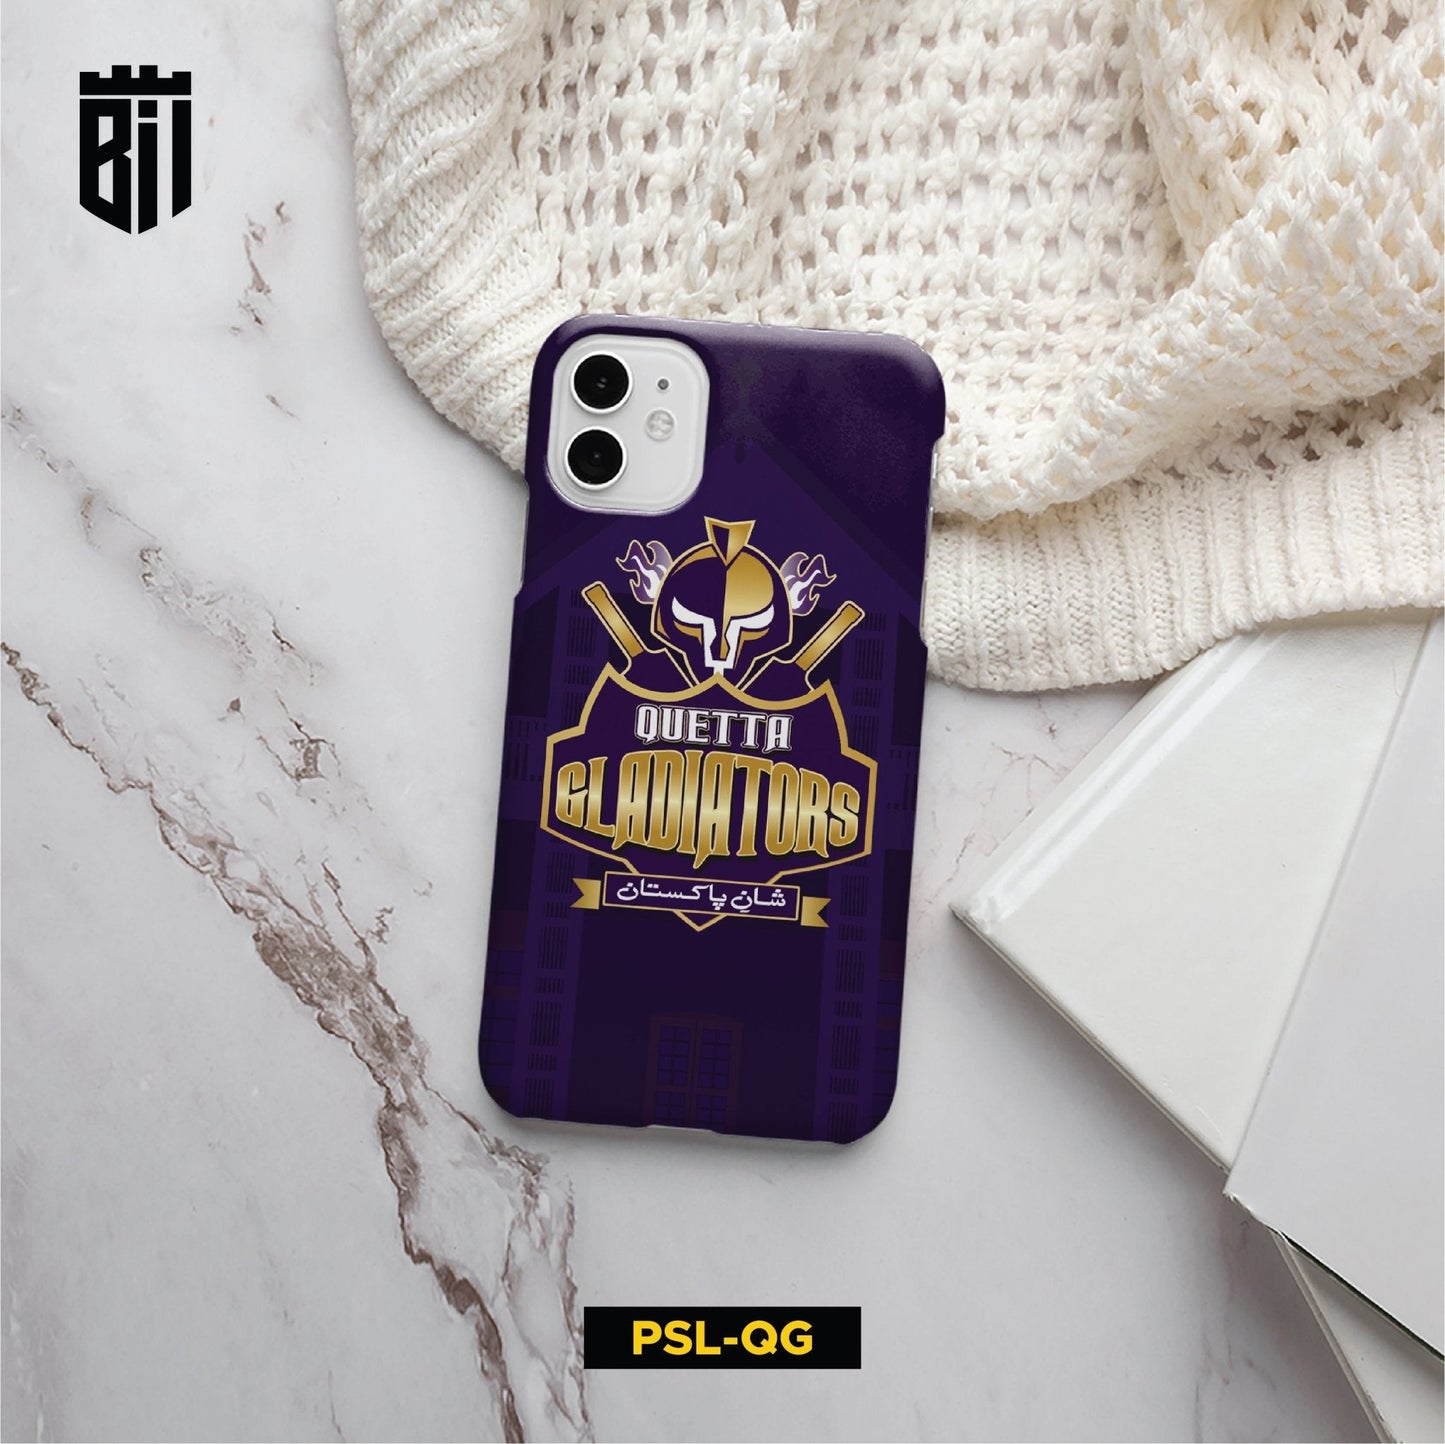 PSL-QG - PSL Edition Quetta Gladiators Customized Mobile Case - BREACHIT